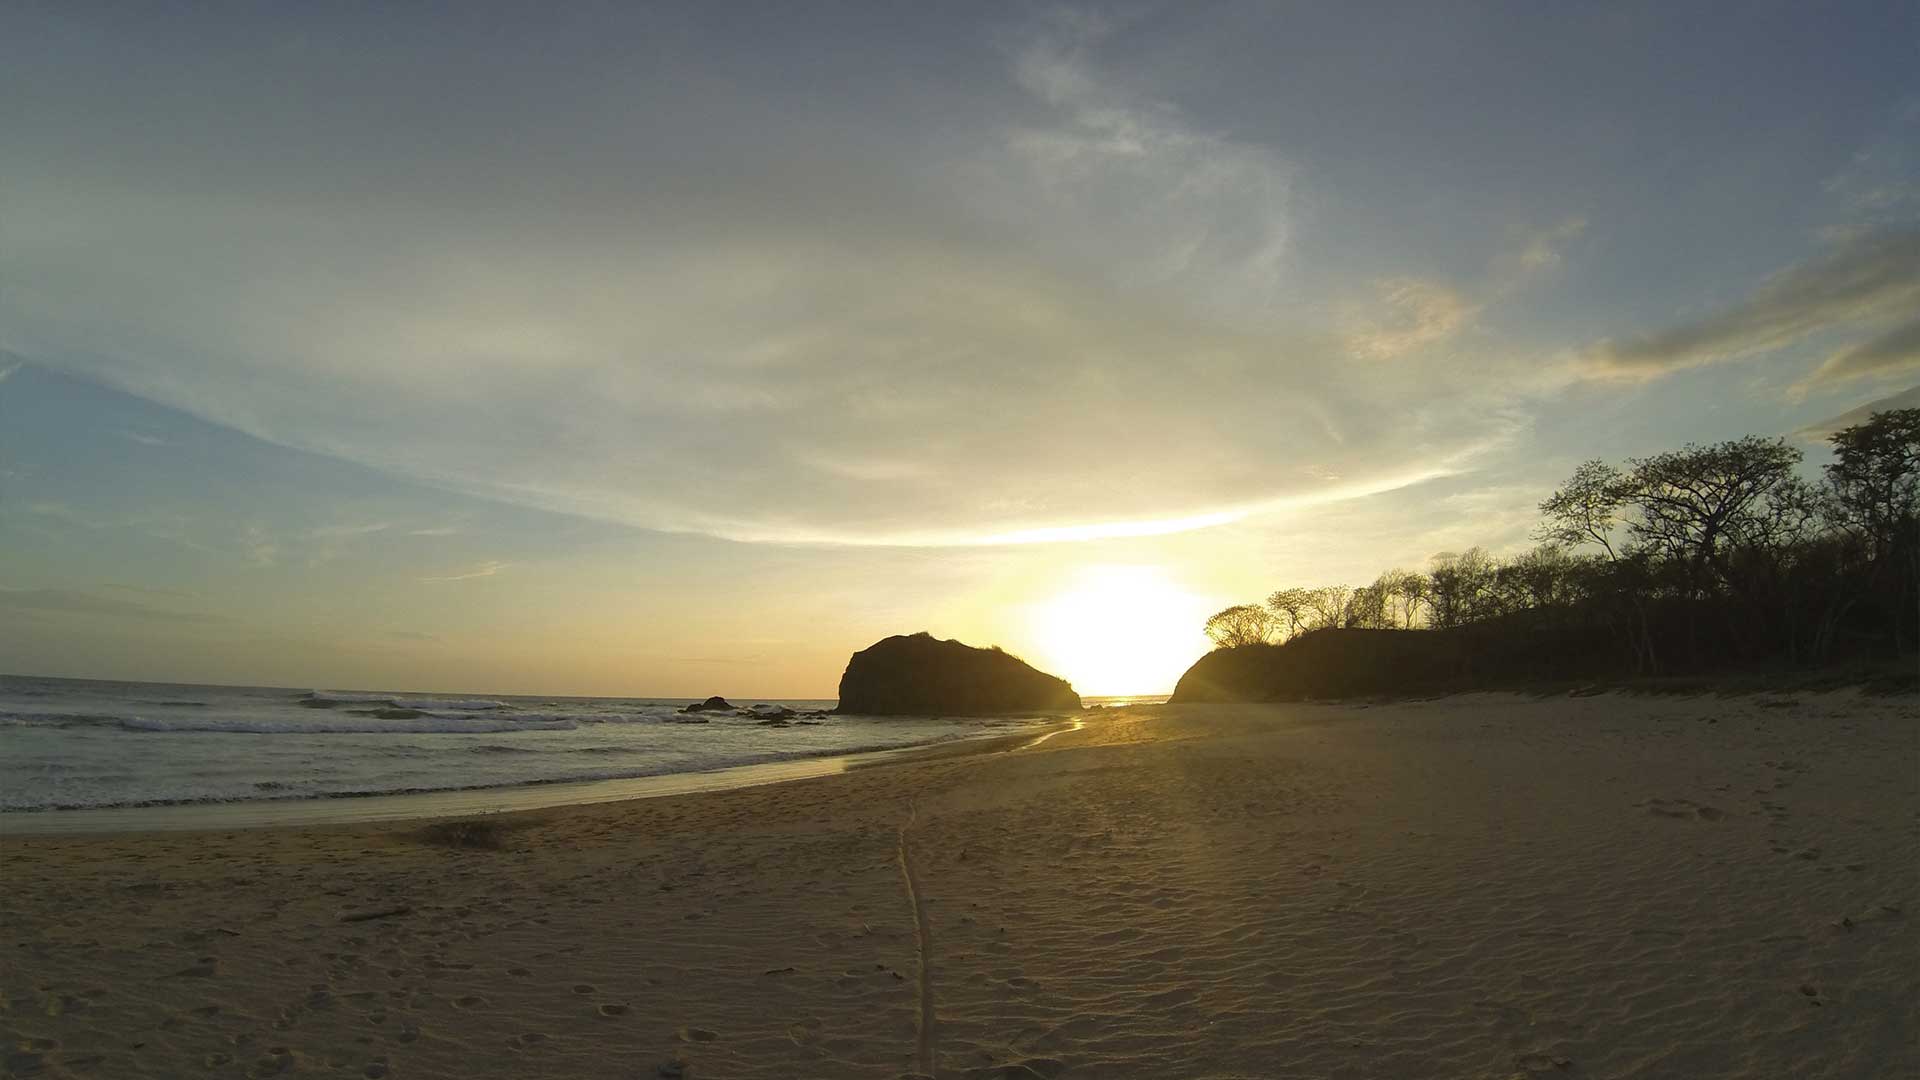 Sunset on an open sandy beach in Playa Grande, Costa Rica